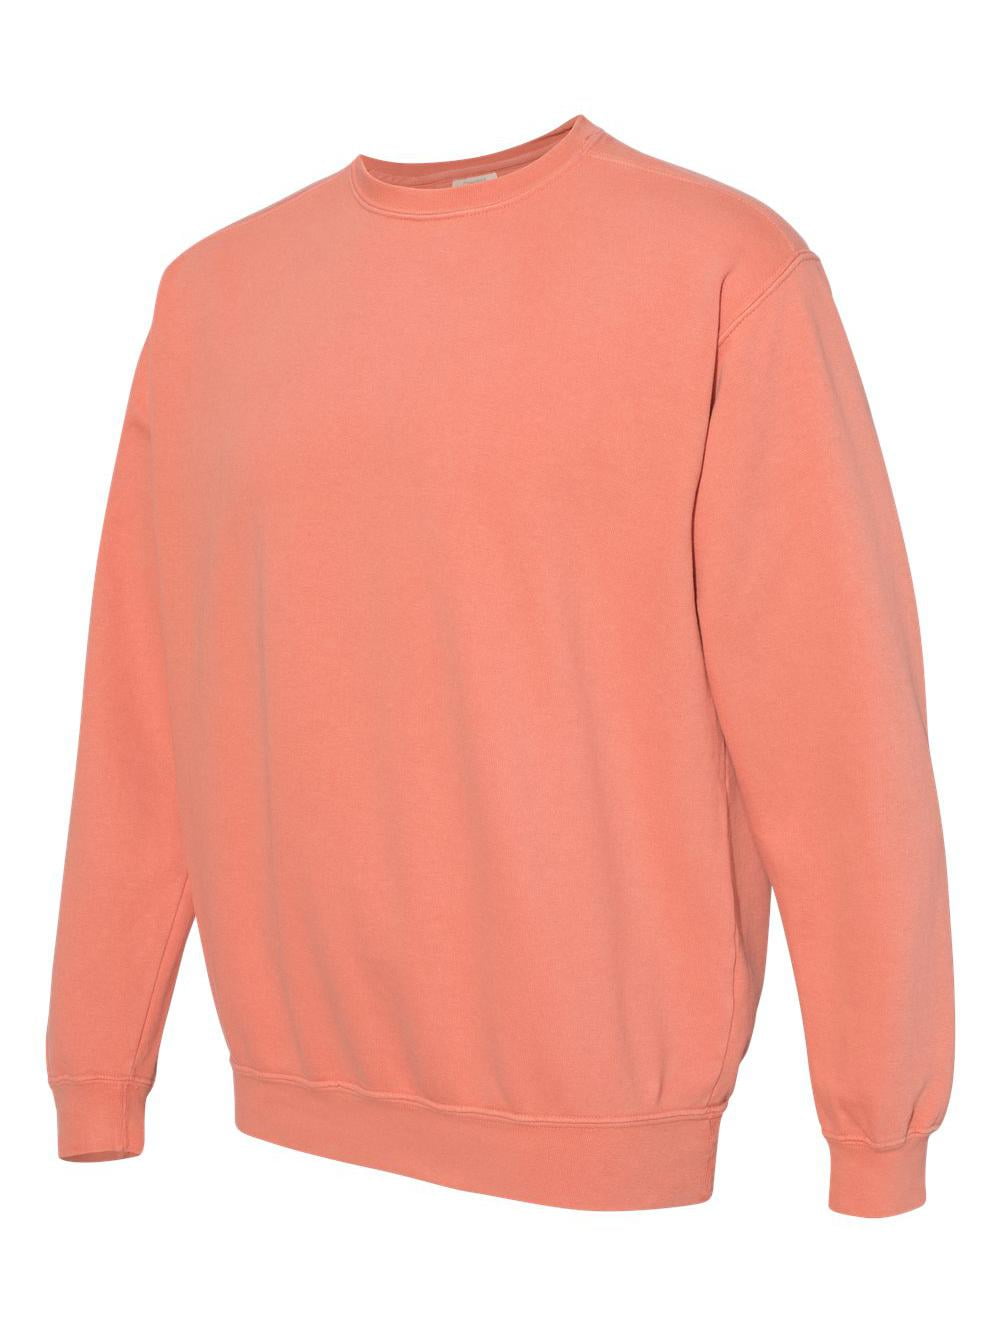 Comfort Colors - Garment-Dyed Sweatshirt - 1566 - White - Size: S